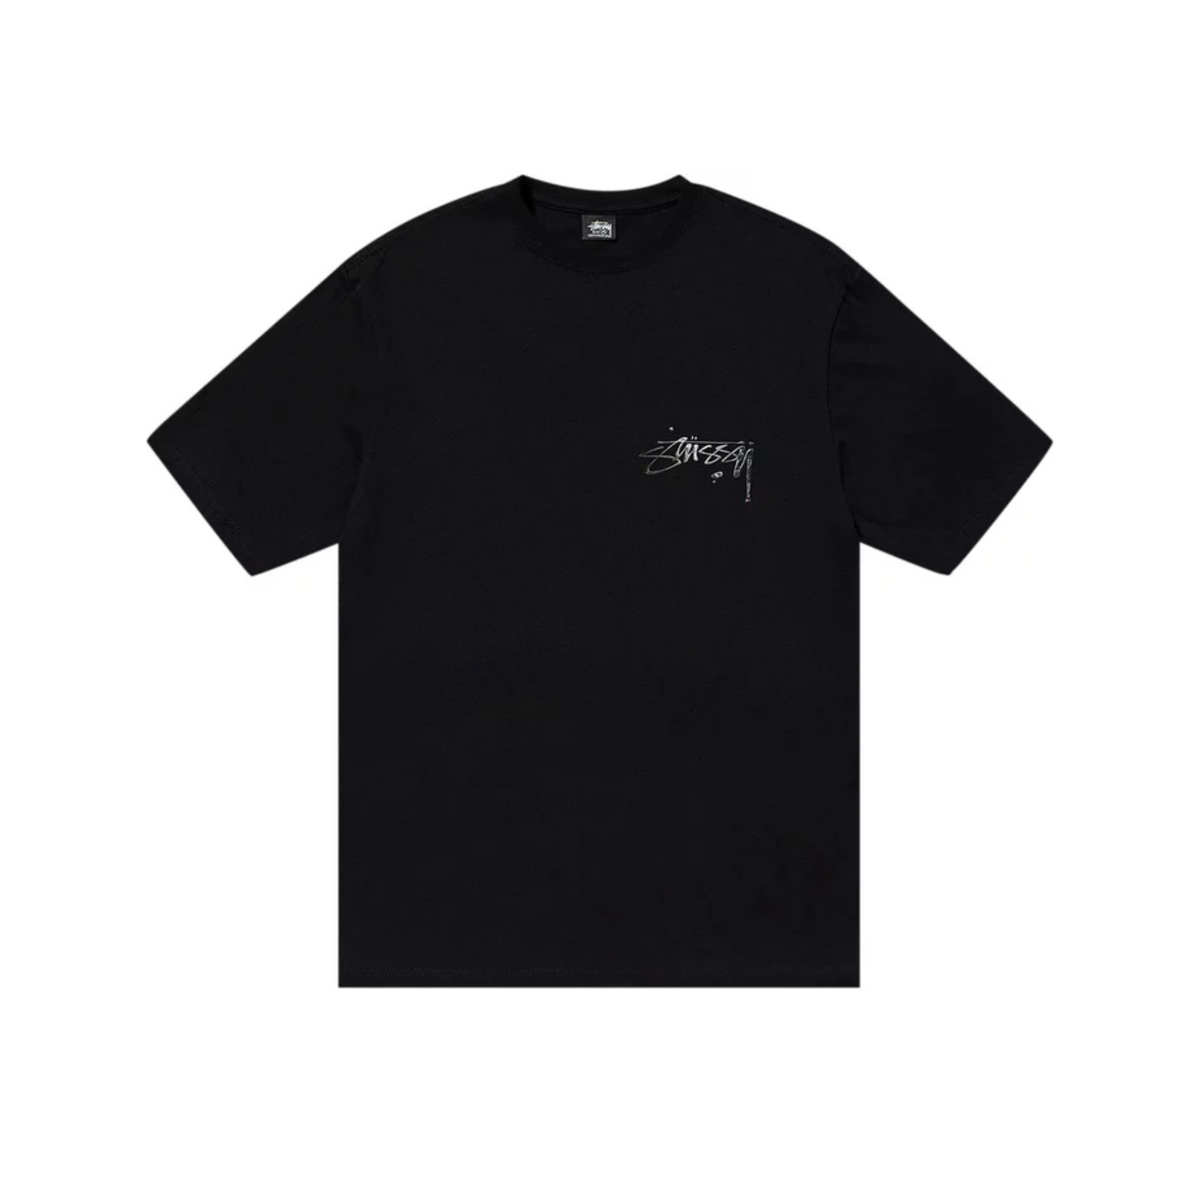 Stüssy Mercury T-Shirt "Black"